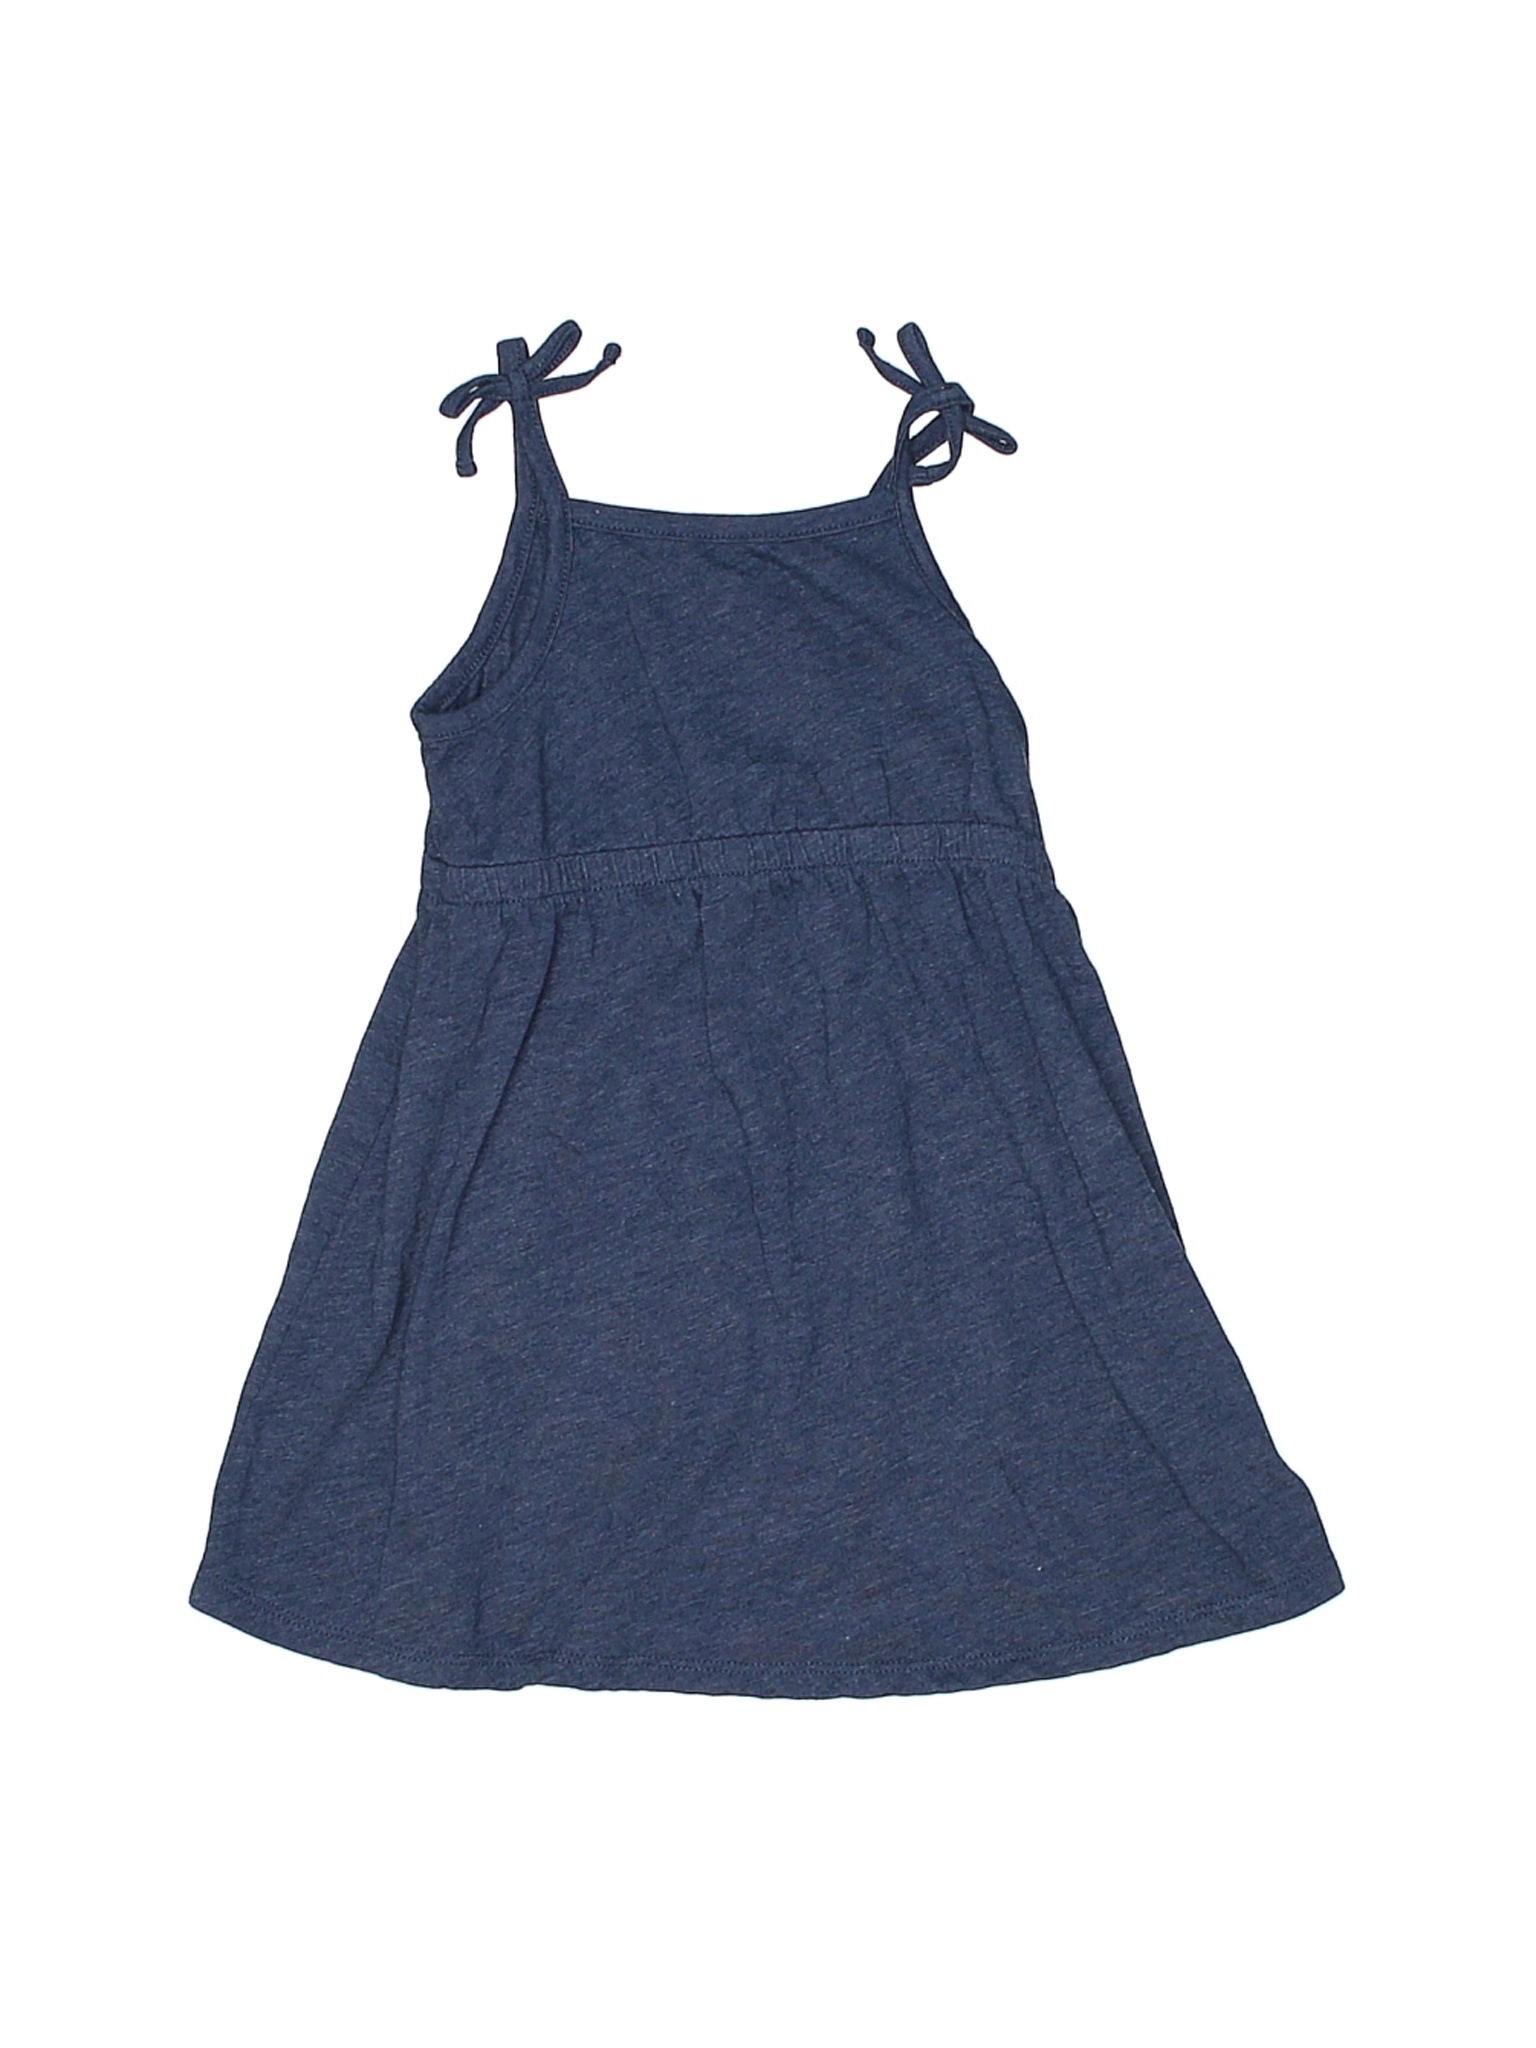 Old Navy Girls Blue Dress 3T | eBay